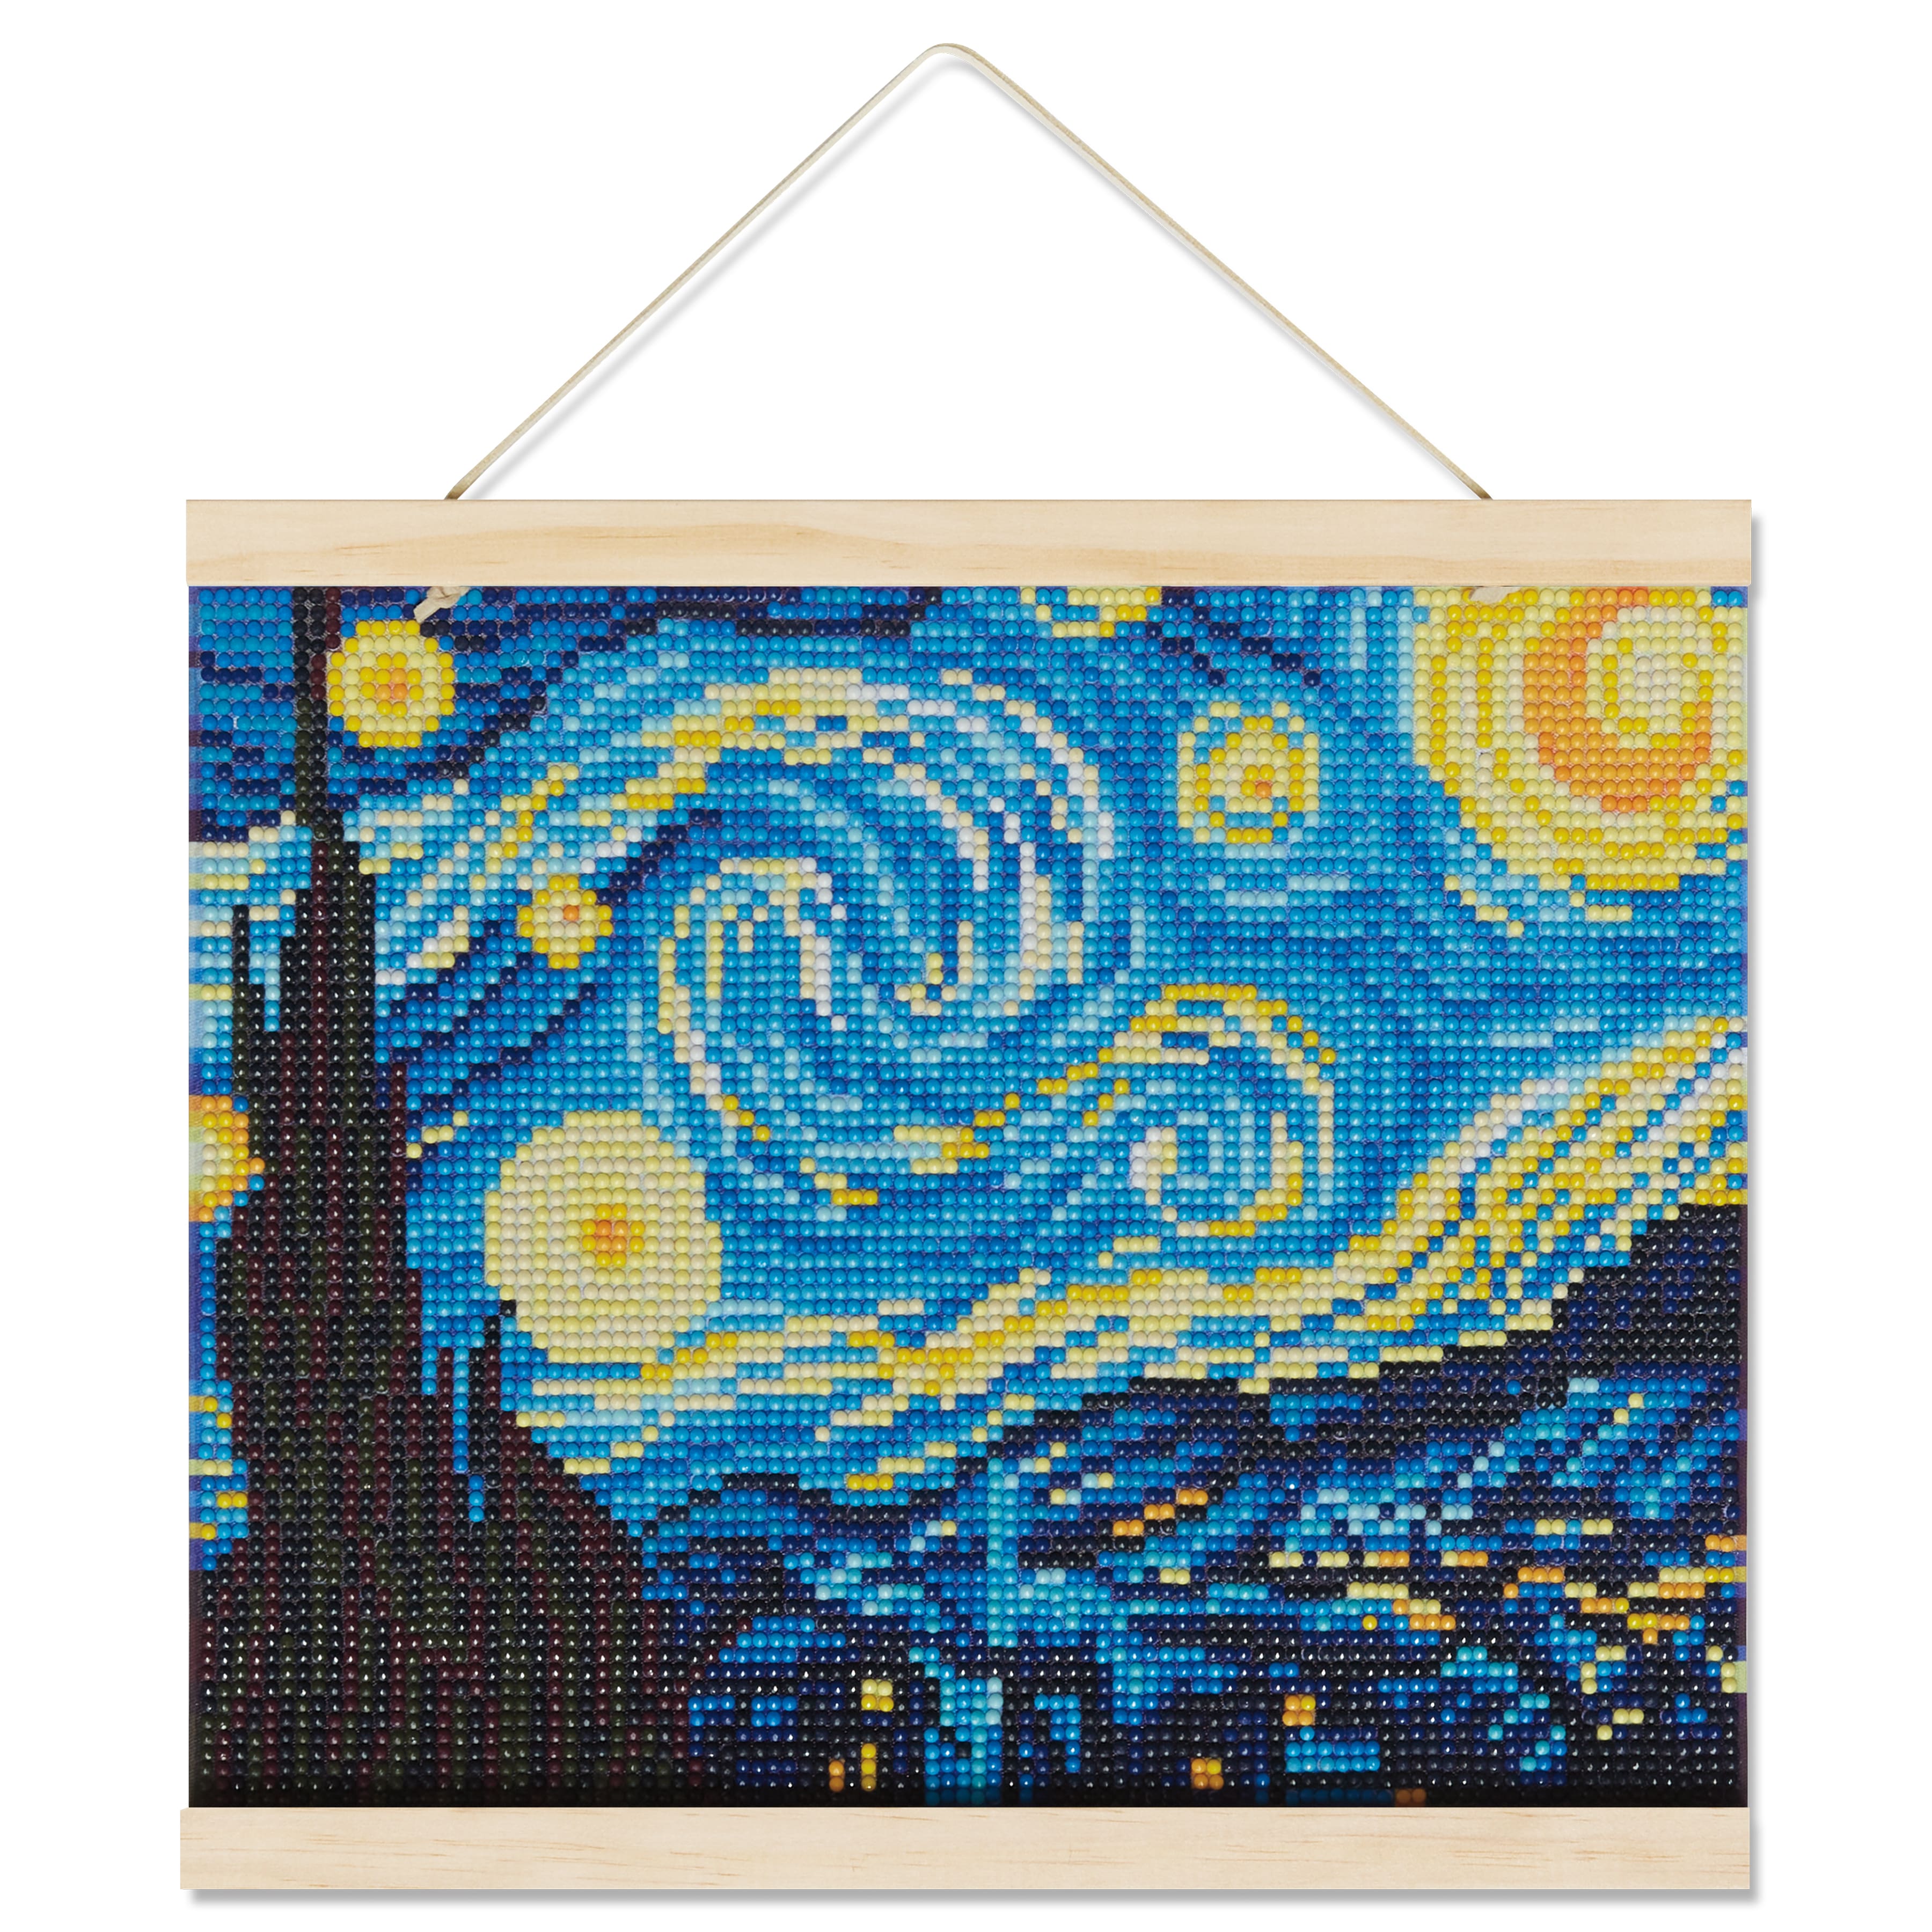 Starry Night with Frame Diamond Art Kit by Make Market&#xAE;